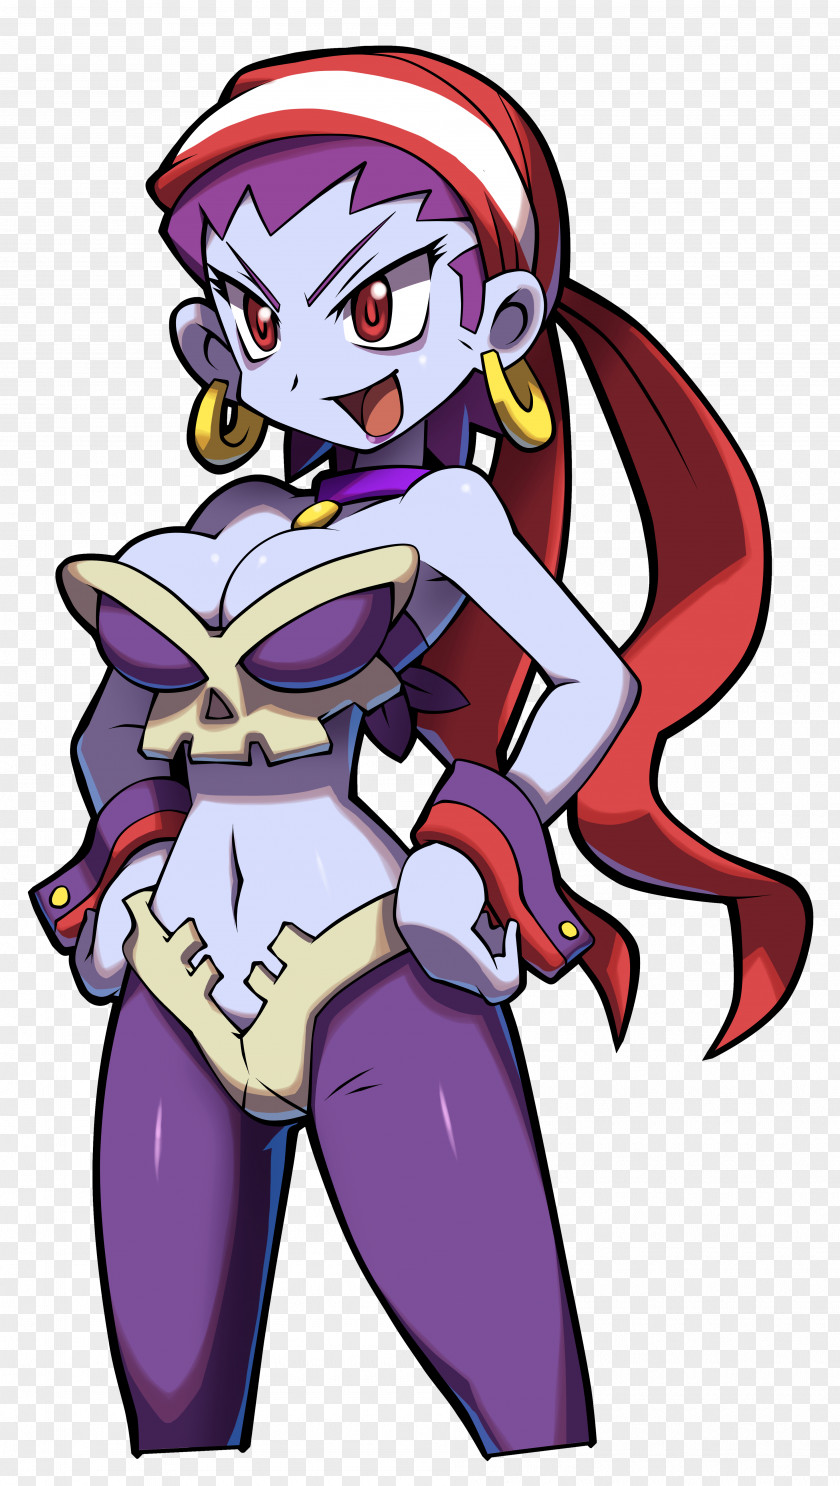 Shantae And The Pirate's Curse Shantae: Half-Genie Hero PlayStation 4 Risky's Revenge WayForward Technologies PNG